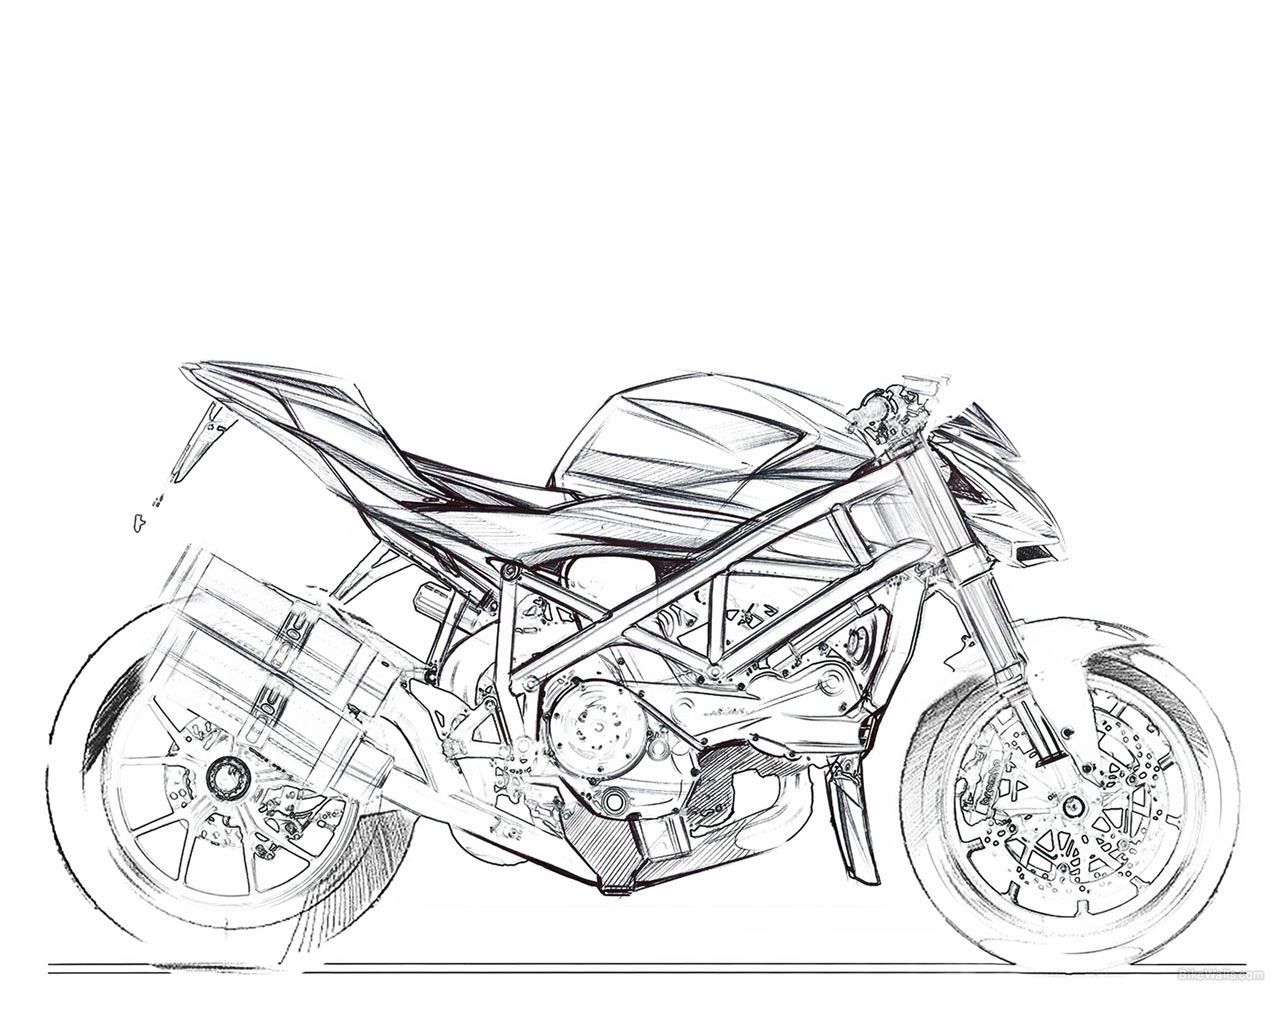 bikewalls.co,. Sketches, Motorcycle drawing